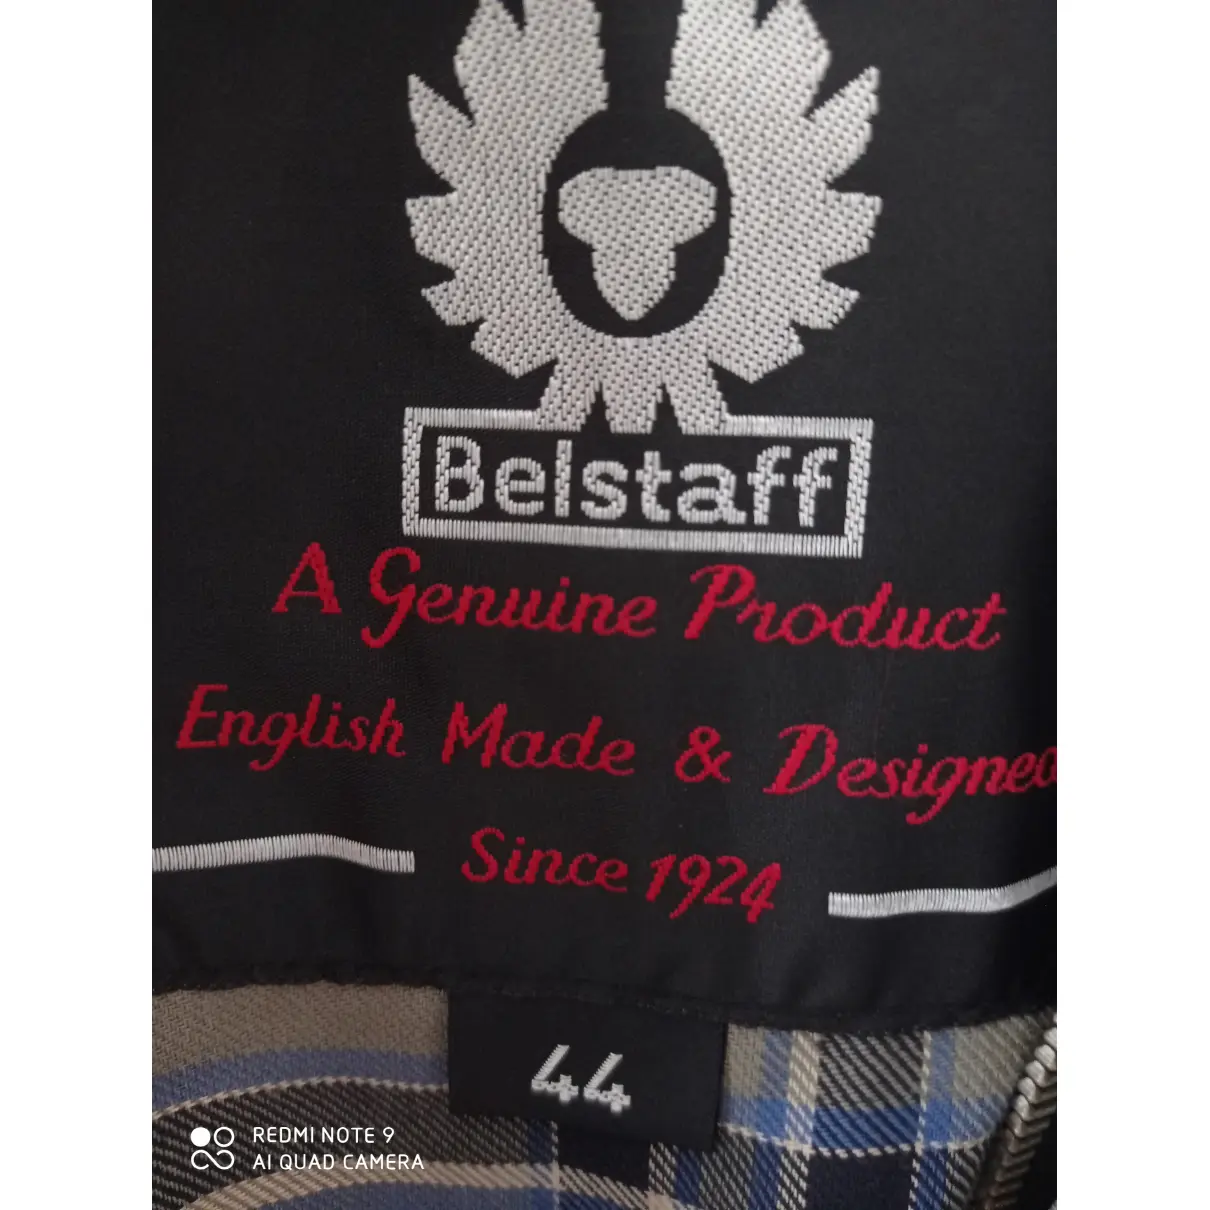 Jacket Belstaff